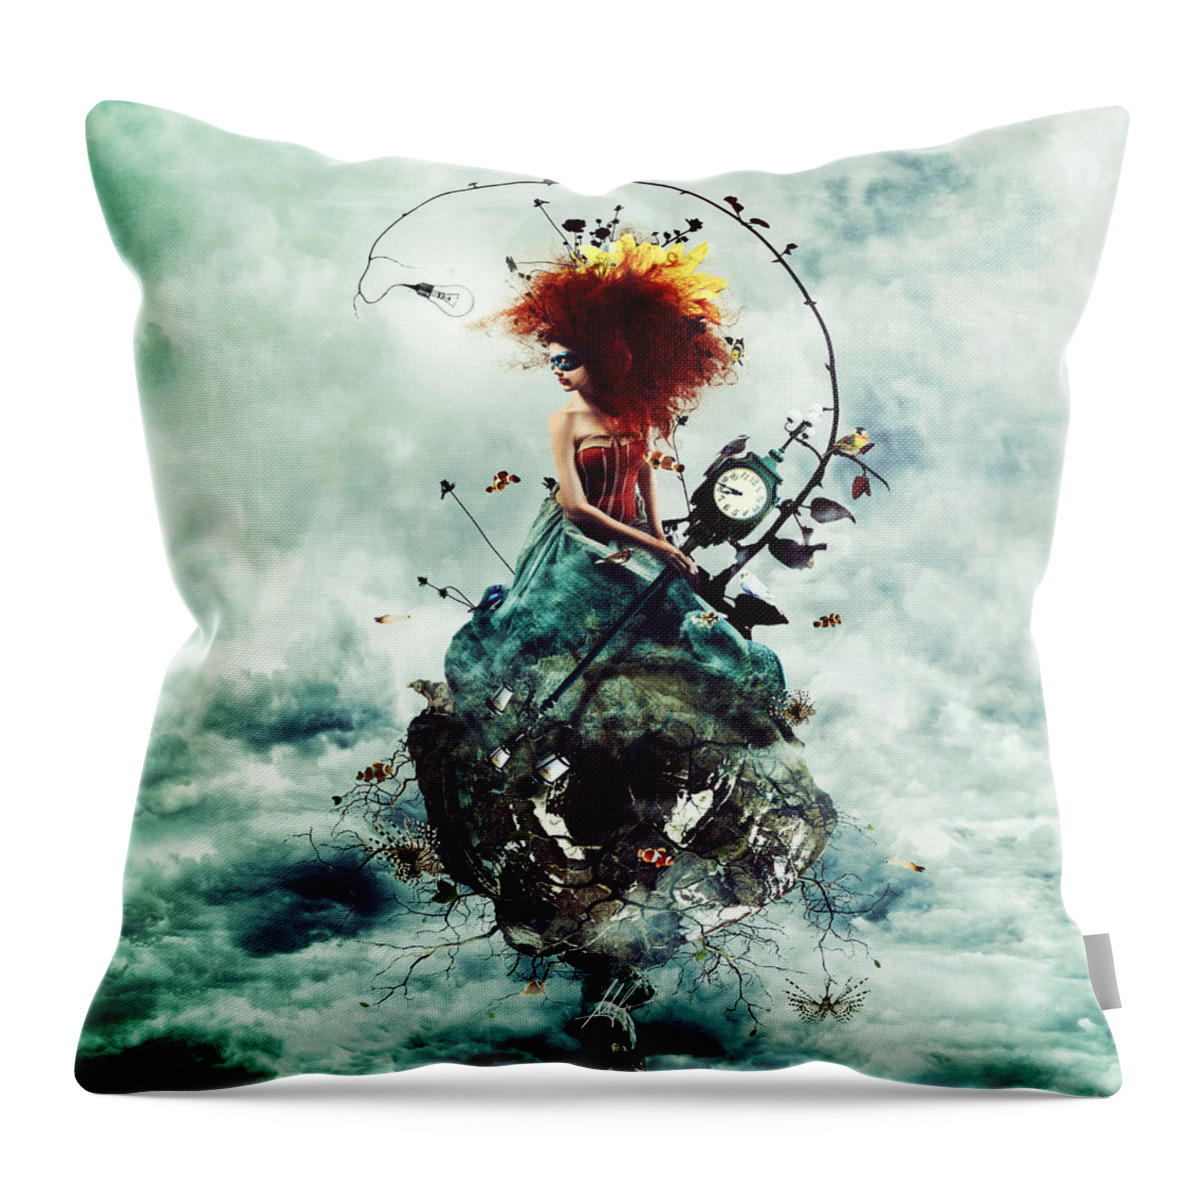 Surreal Throw Pillow featuring the digital art Delirium by Mario Sanchez Nevado